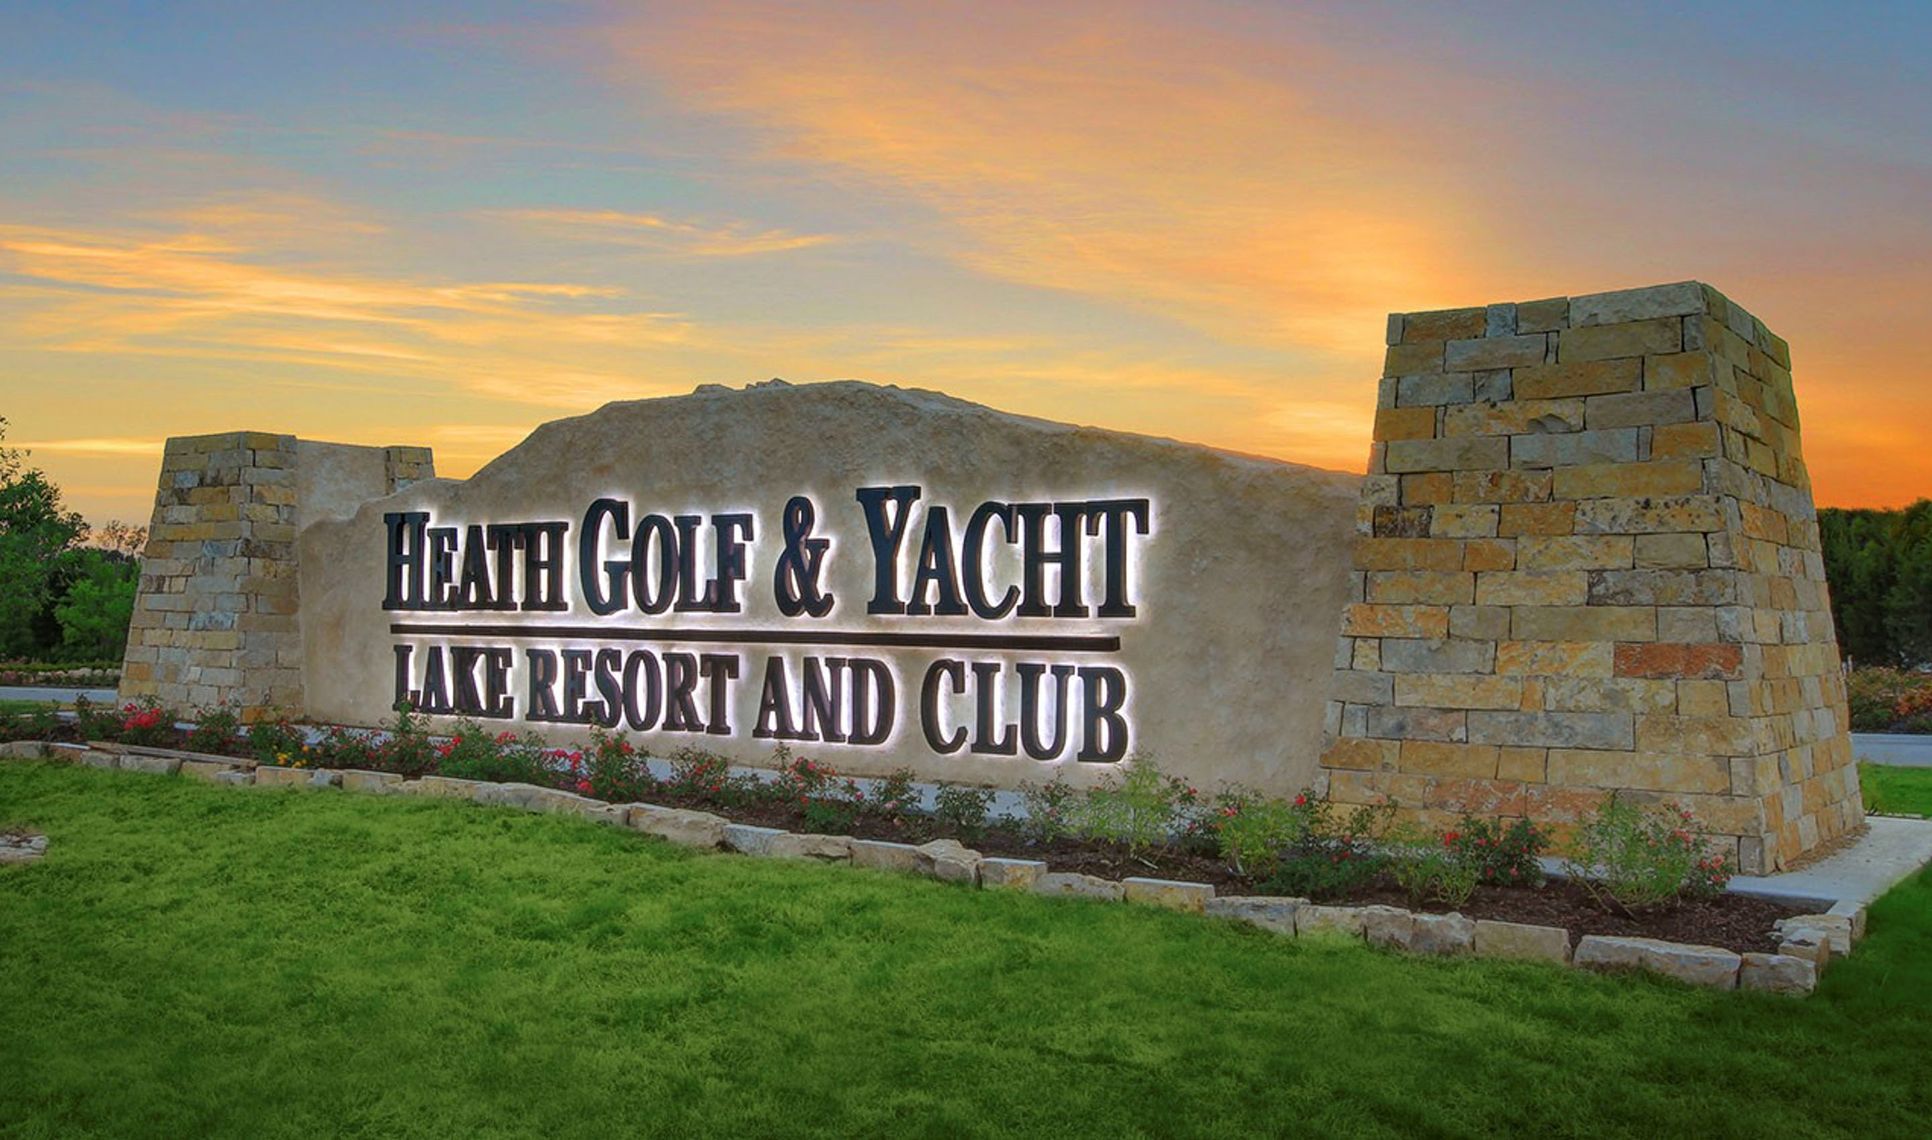 HeathGolf&Yacht-Amenities_Signage-Sunset2